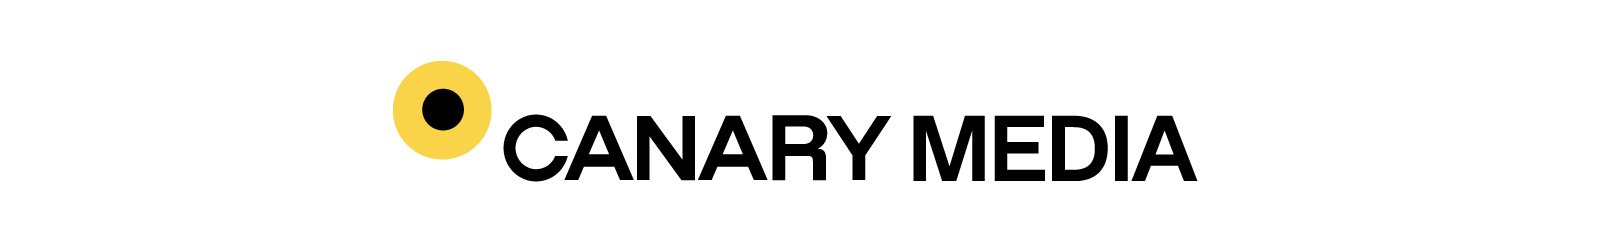 The logo for Canary Media.